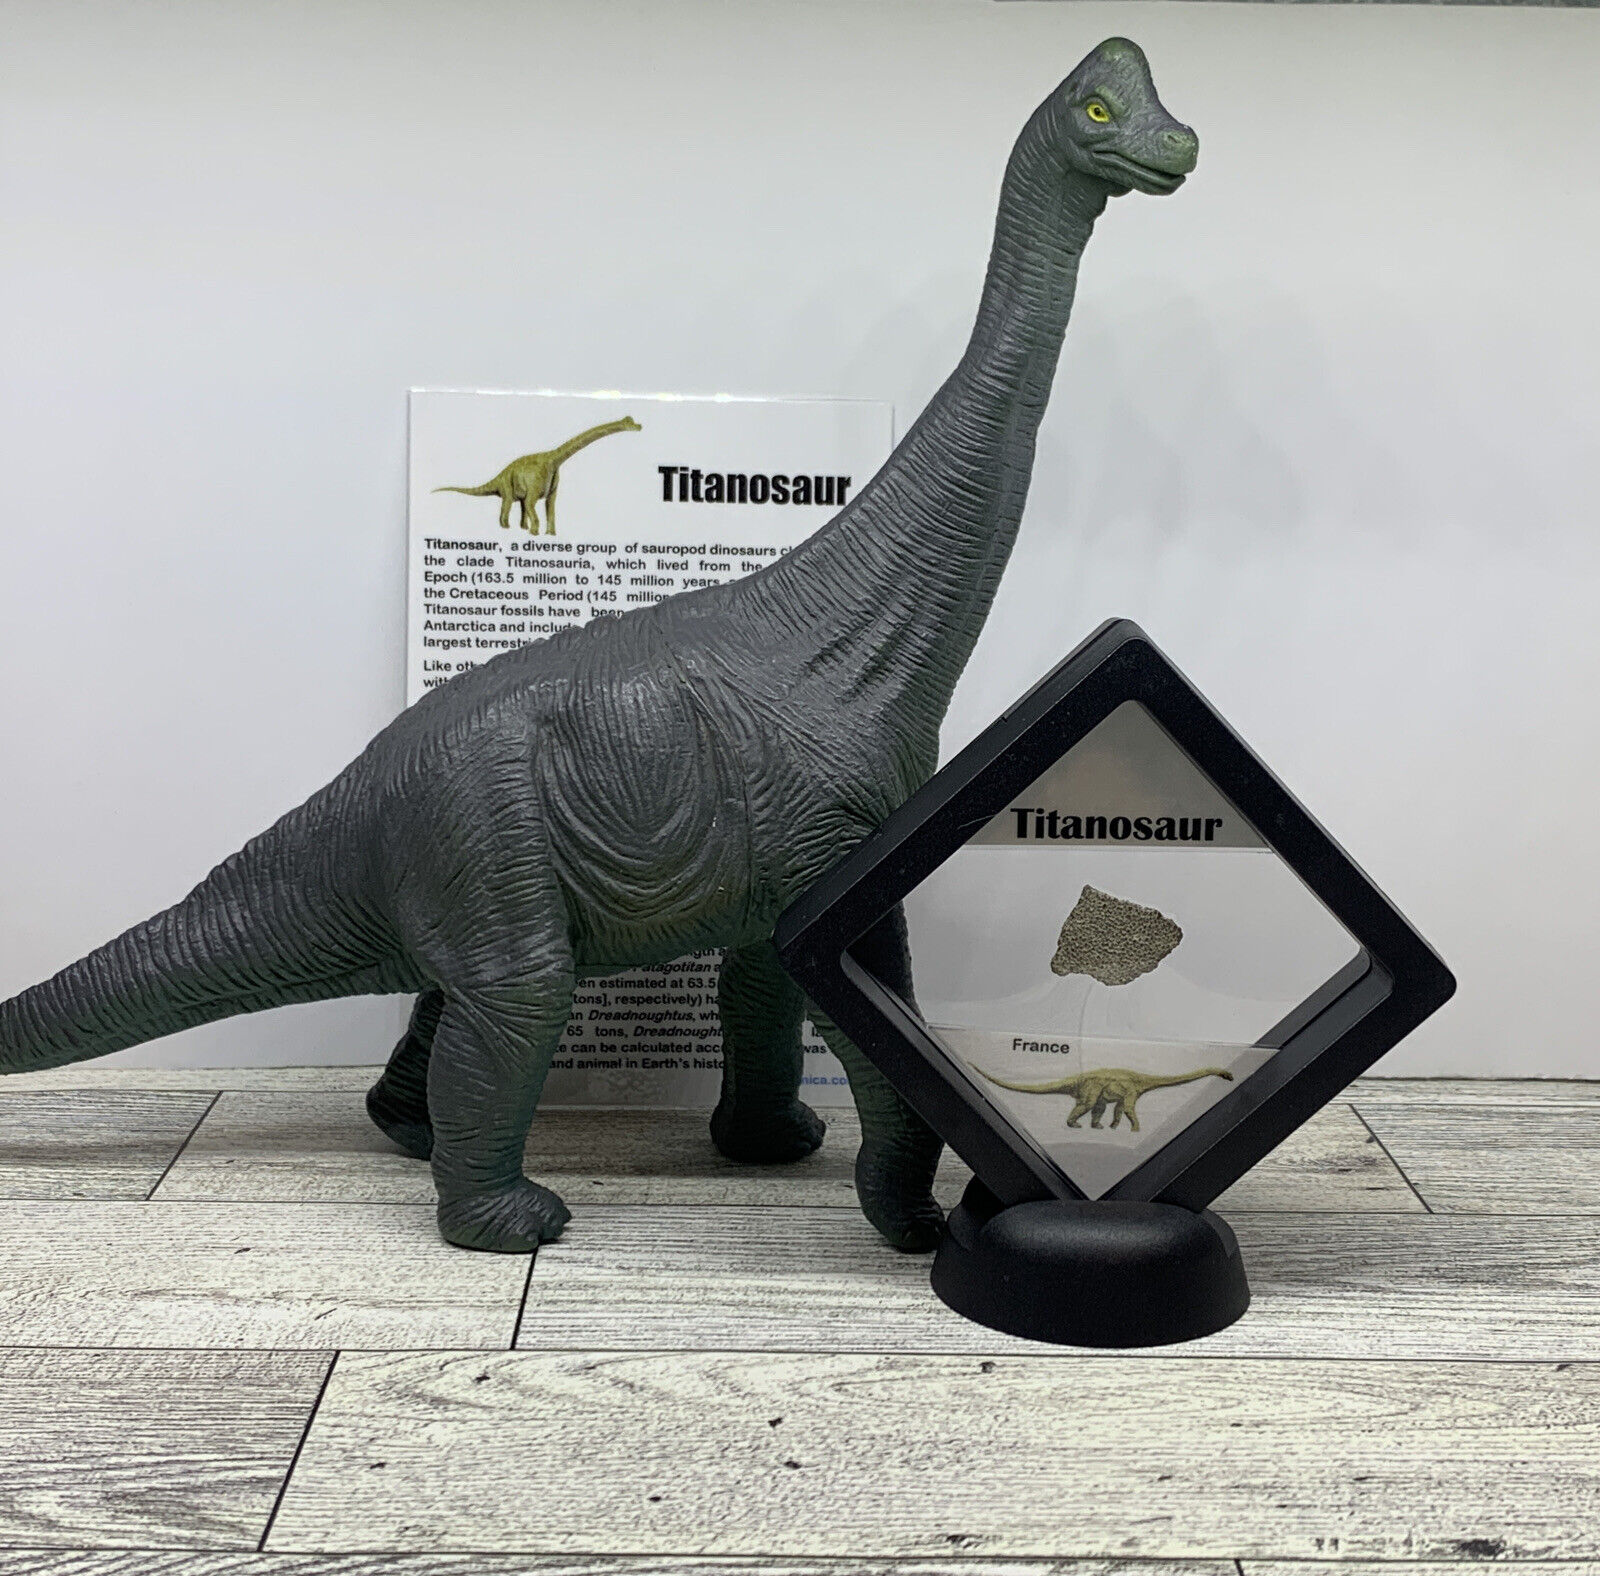 Titanosaur Extinct Dinosaur Egg Shell Fossil Piece with Brachiosaurus Toy